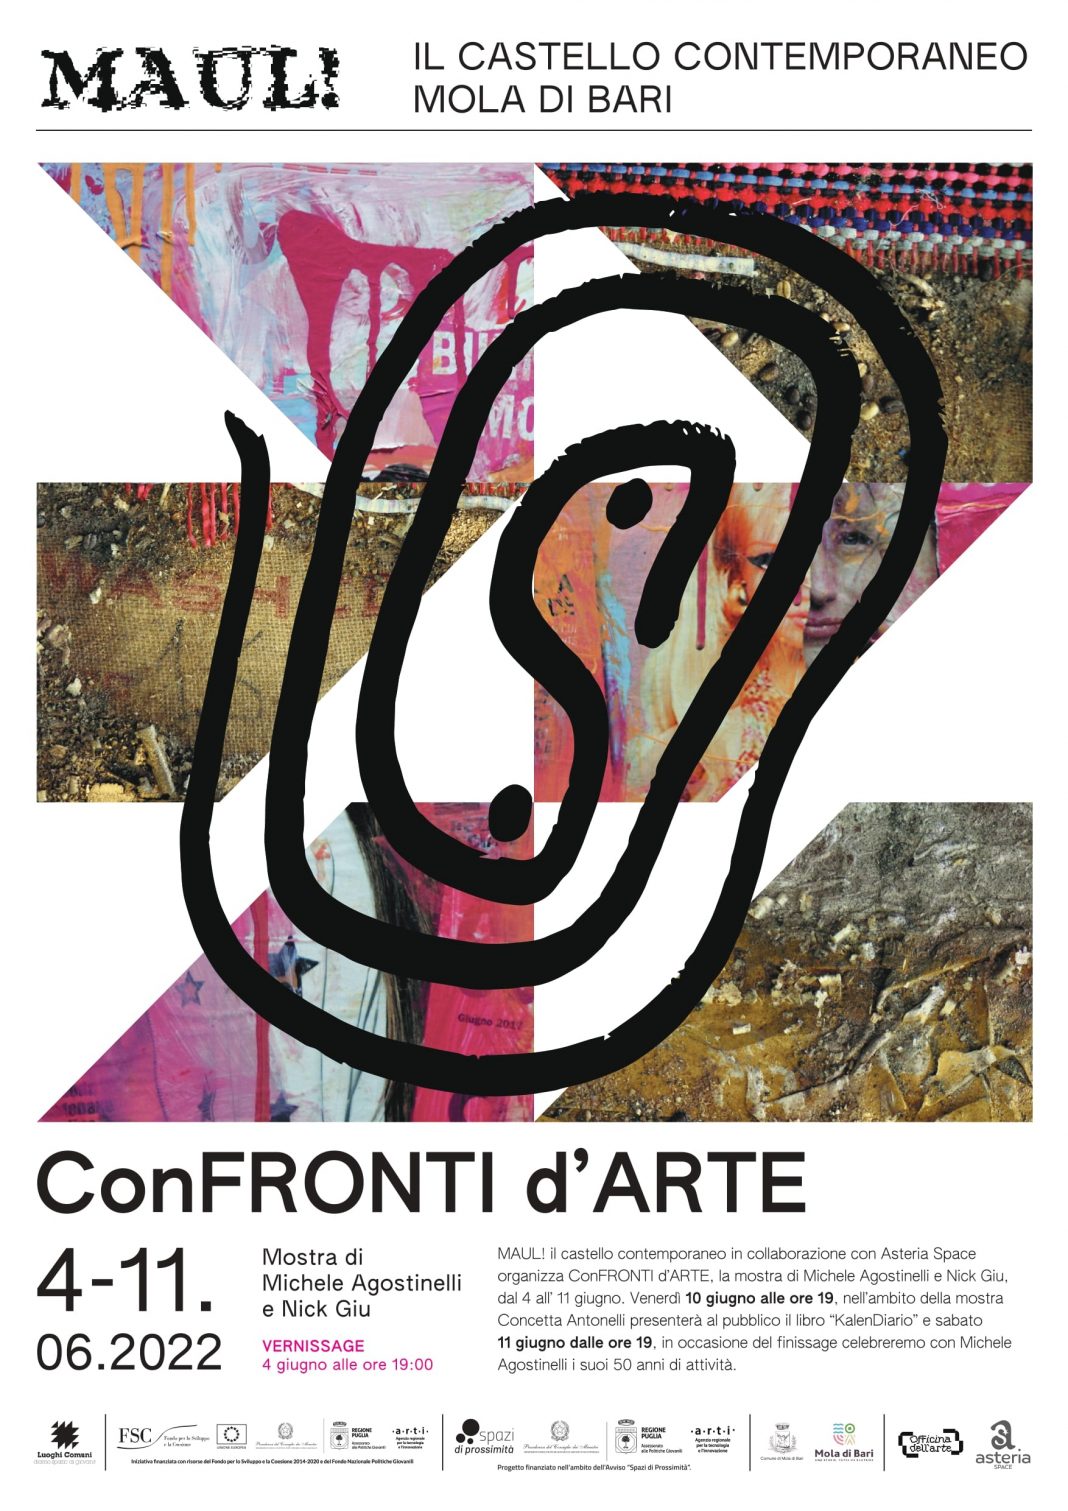 Michele Agotinelli / Nick Giu – ConFRONTI d’ARTEhttps://www.exibart.com/repository/media/formidable/11/img/086/Confronti_darte_locandina-min-1068x1511.jpeg